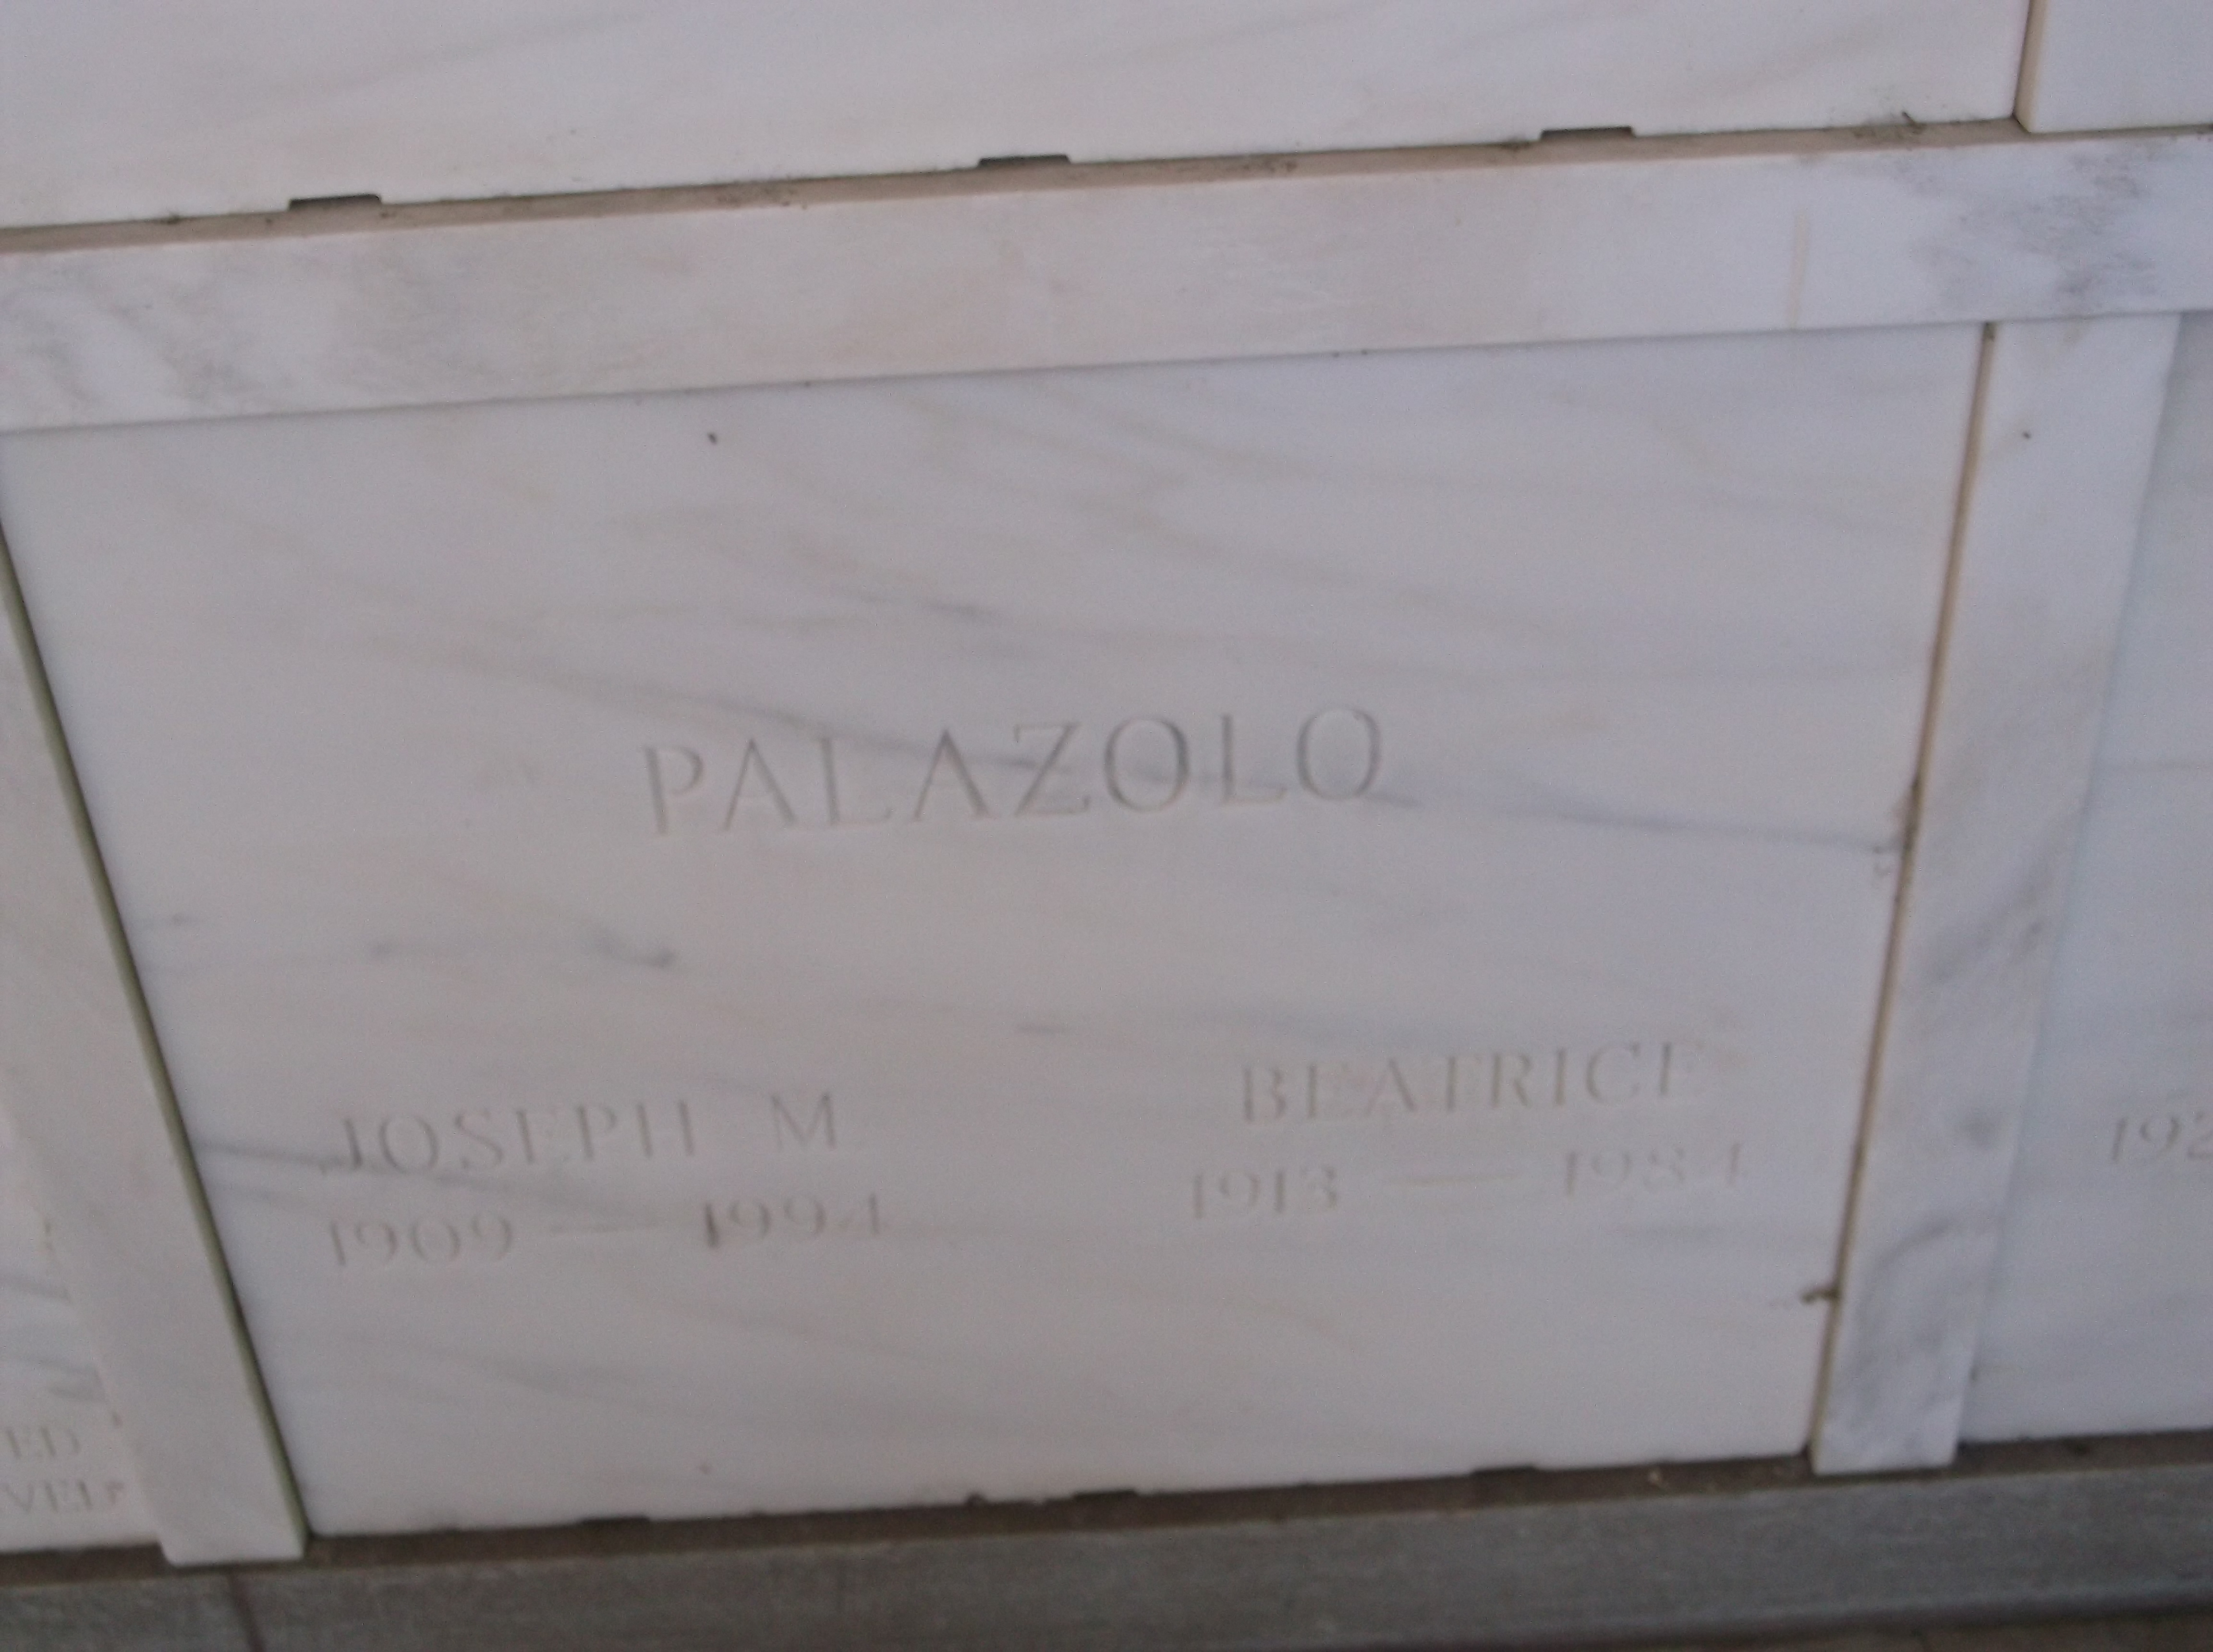 Beatrice Palazolo